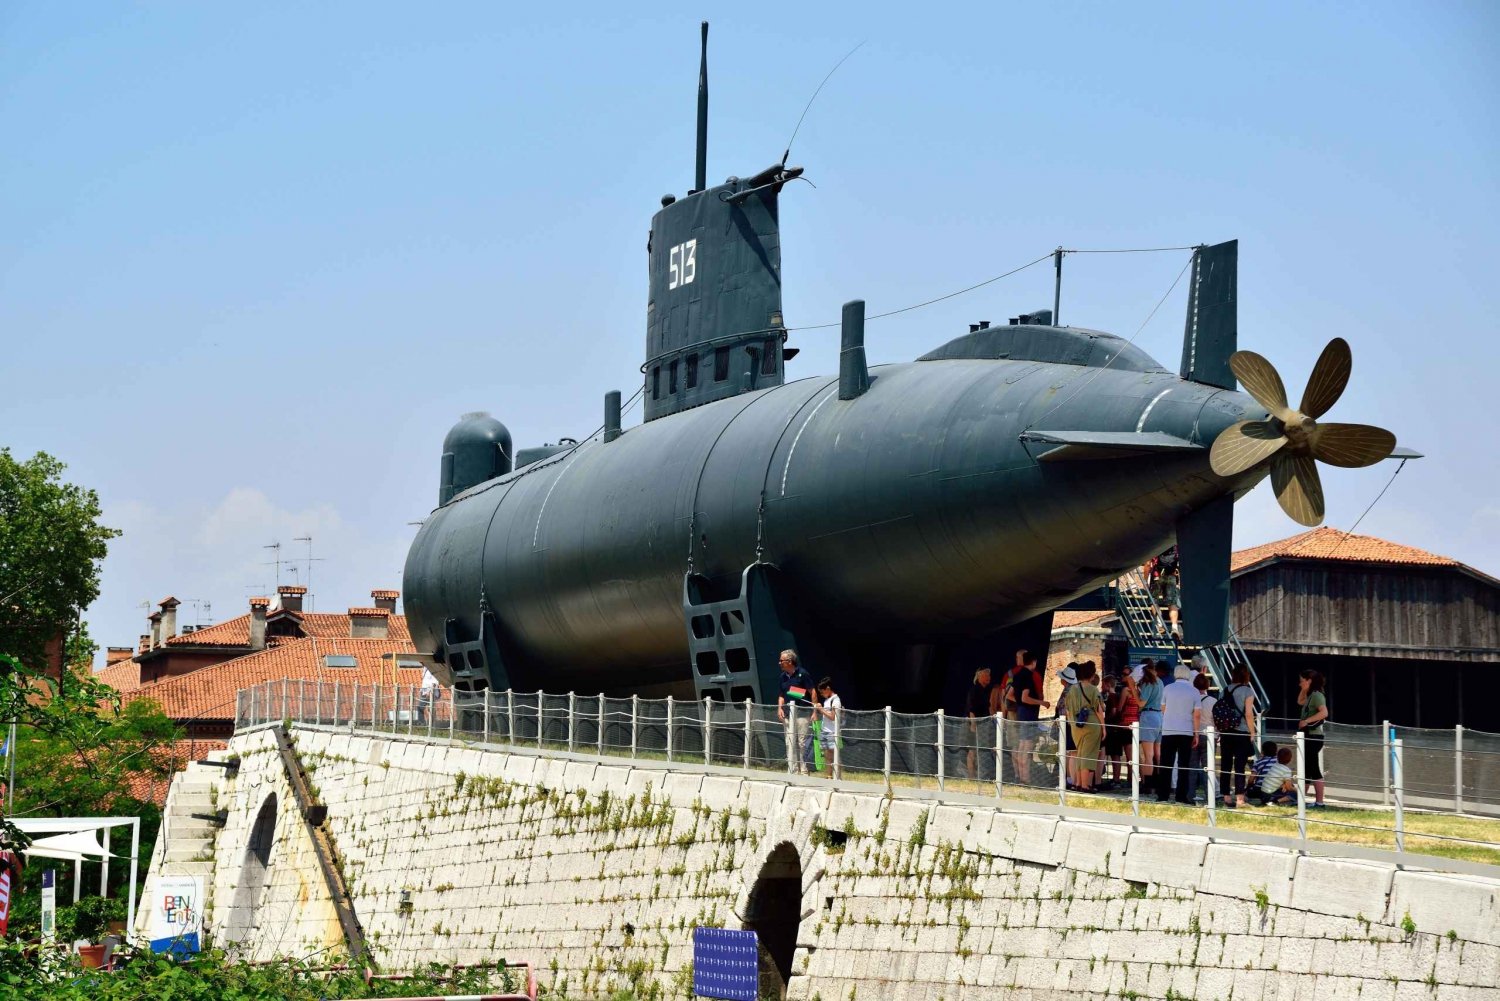 Venice, Submarine Enrico Dandolo and Naval History Museum